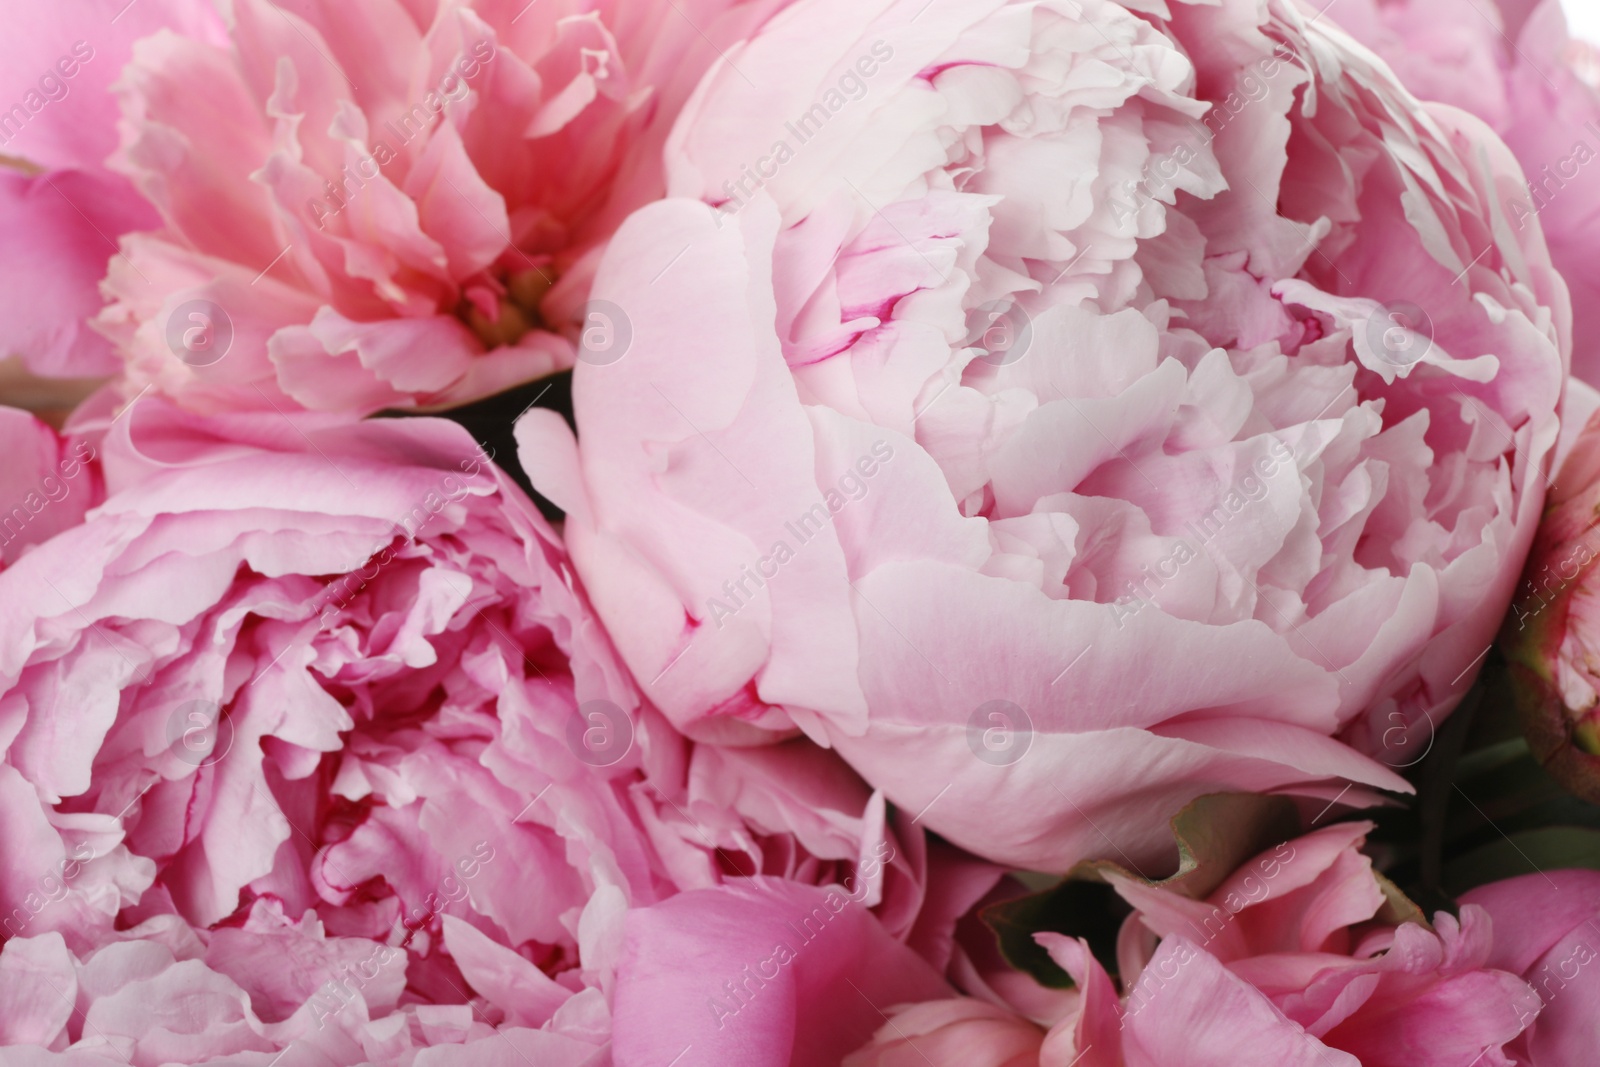 Photo of Closeup view of beautiful pink peony flowers